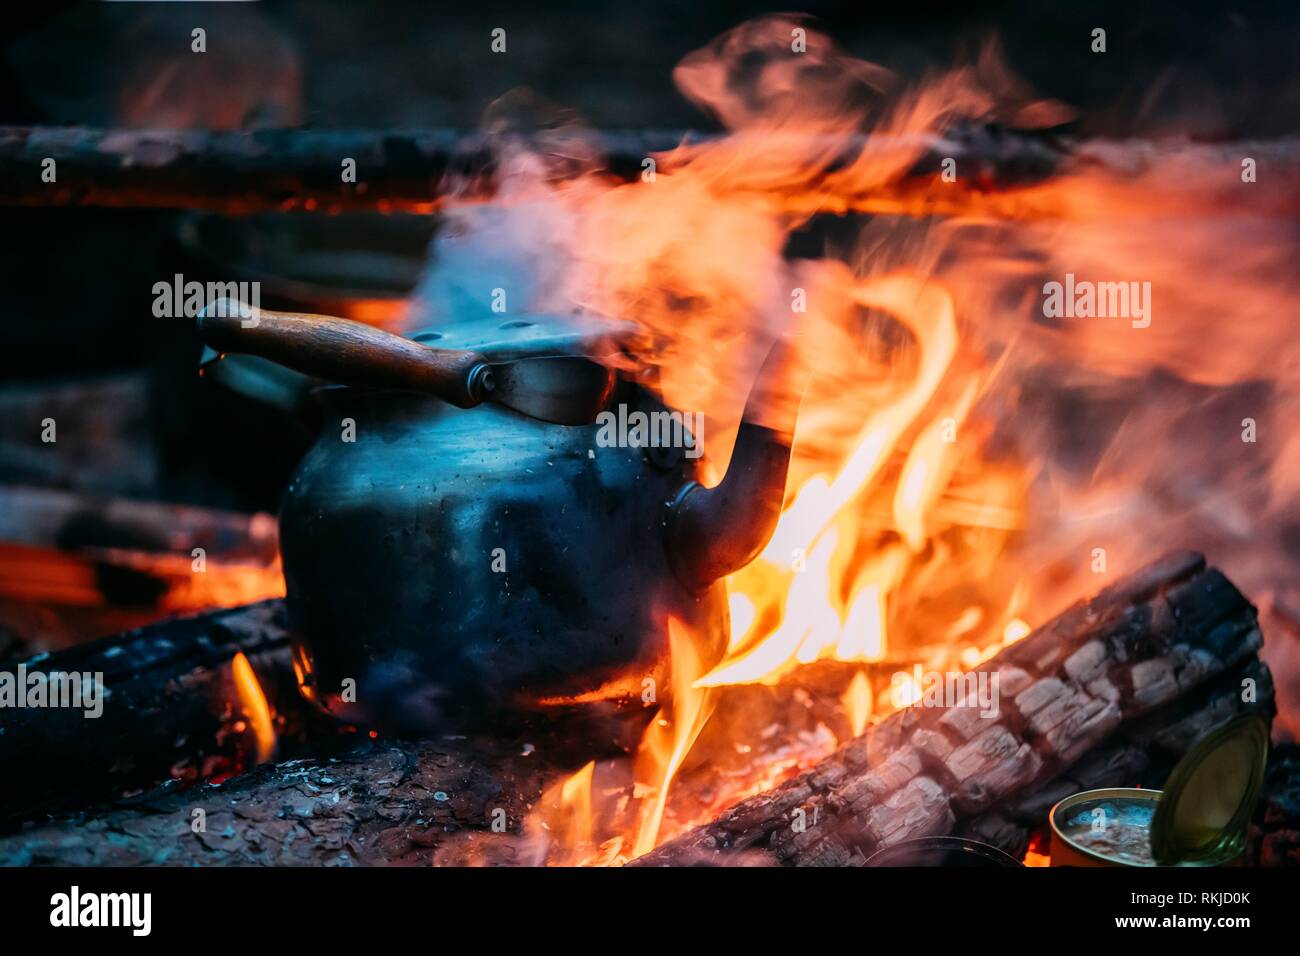 https://c8.alamy.com/comp/RKJD0K/black-old-retro-iron-camp-kettle-boiling-water-on-a-fire-in-forest-bright-flame-fire-of-bonfire-at-dusk-night-RKJD0K.jpg